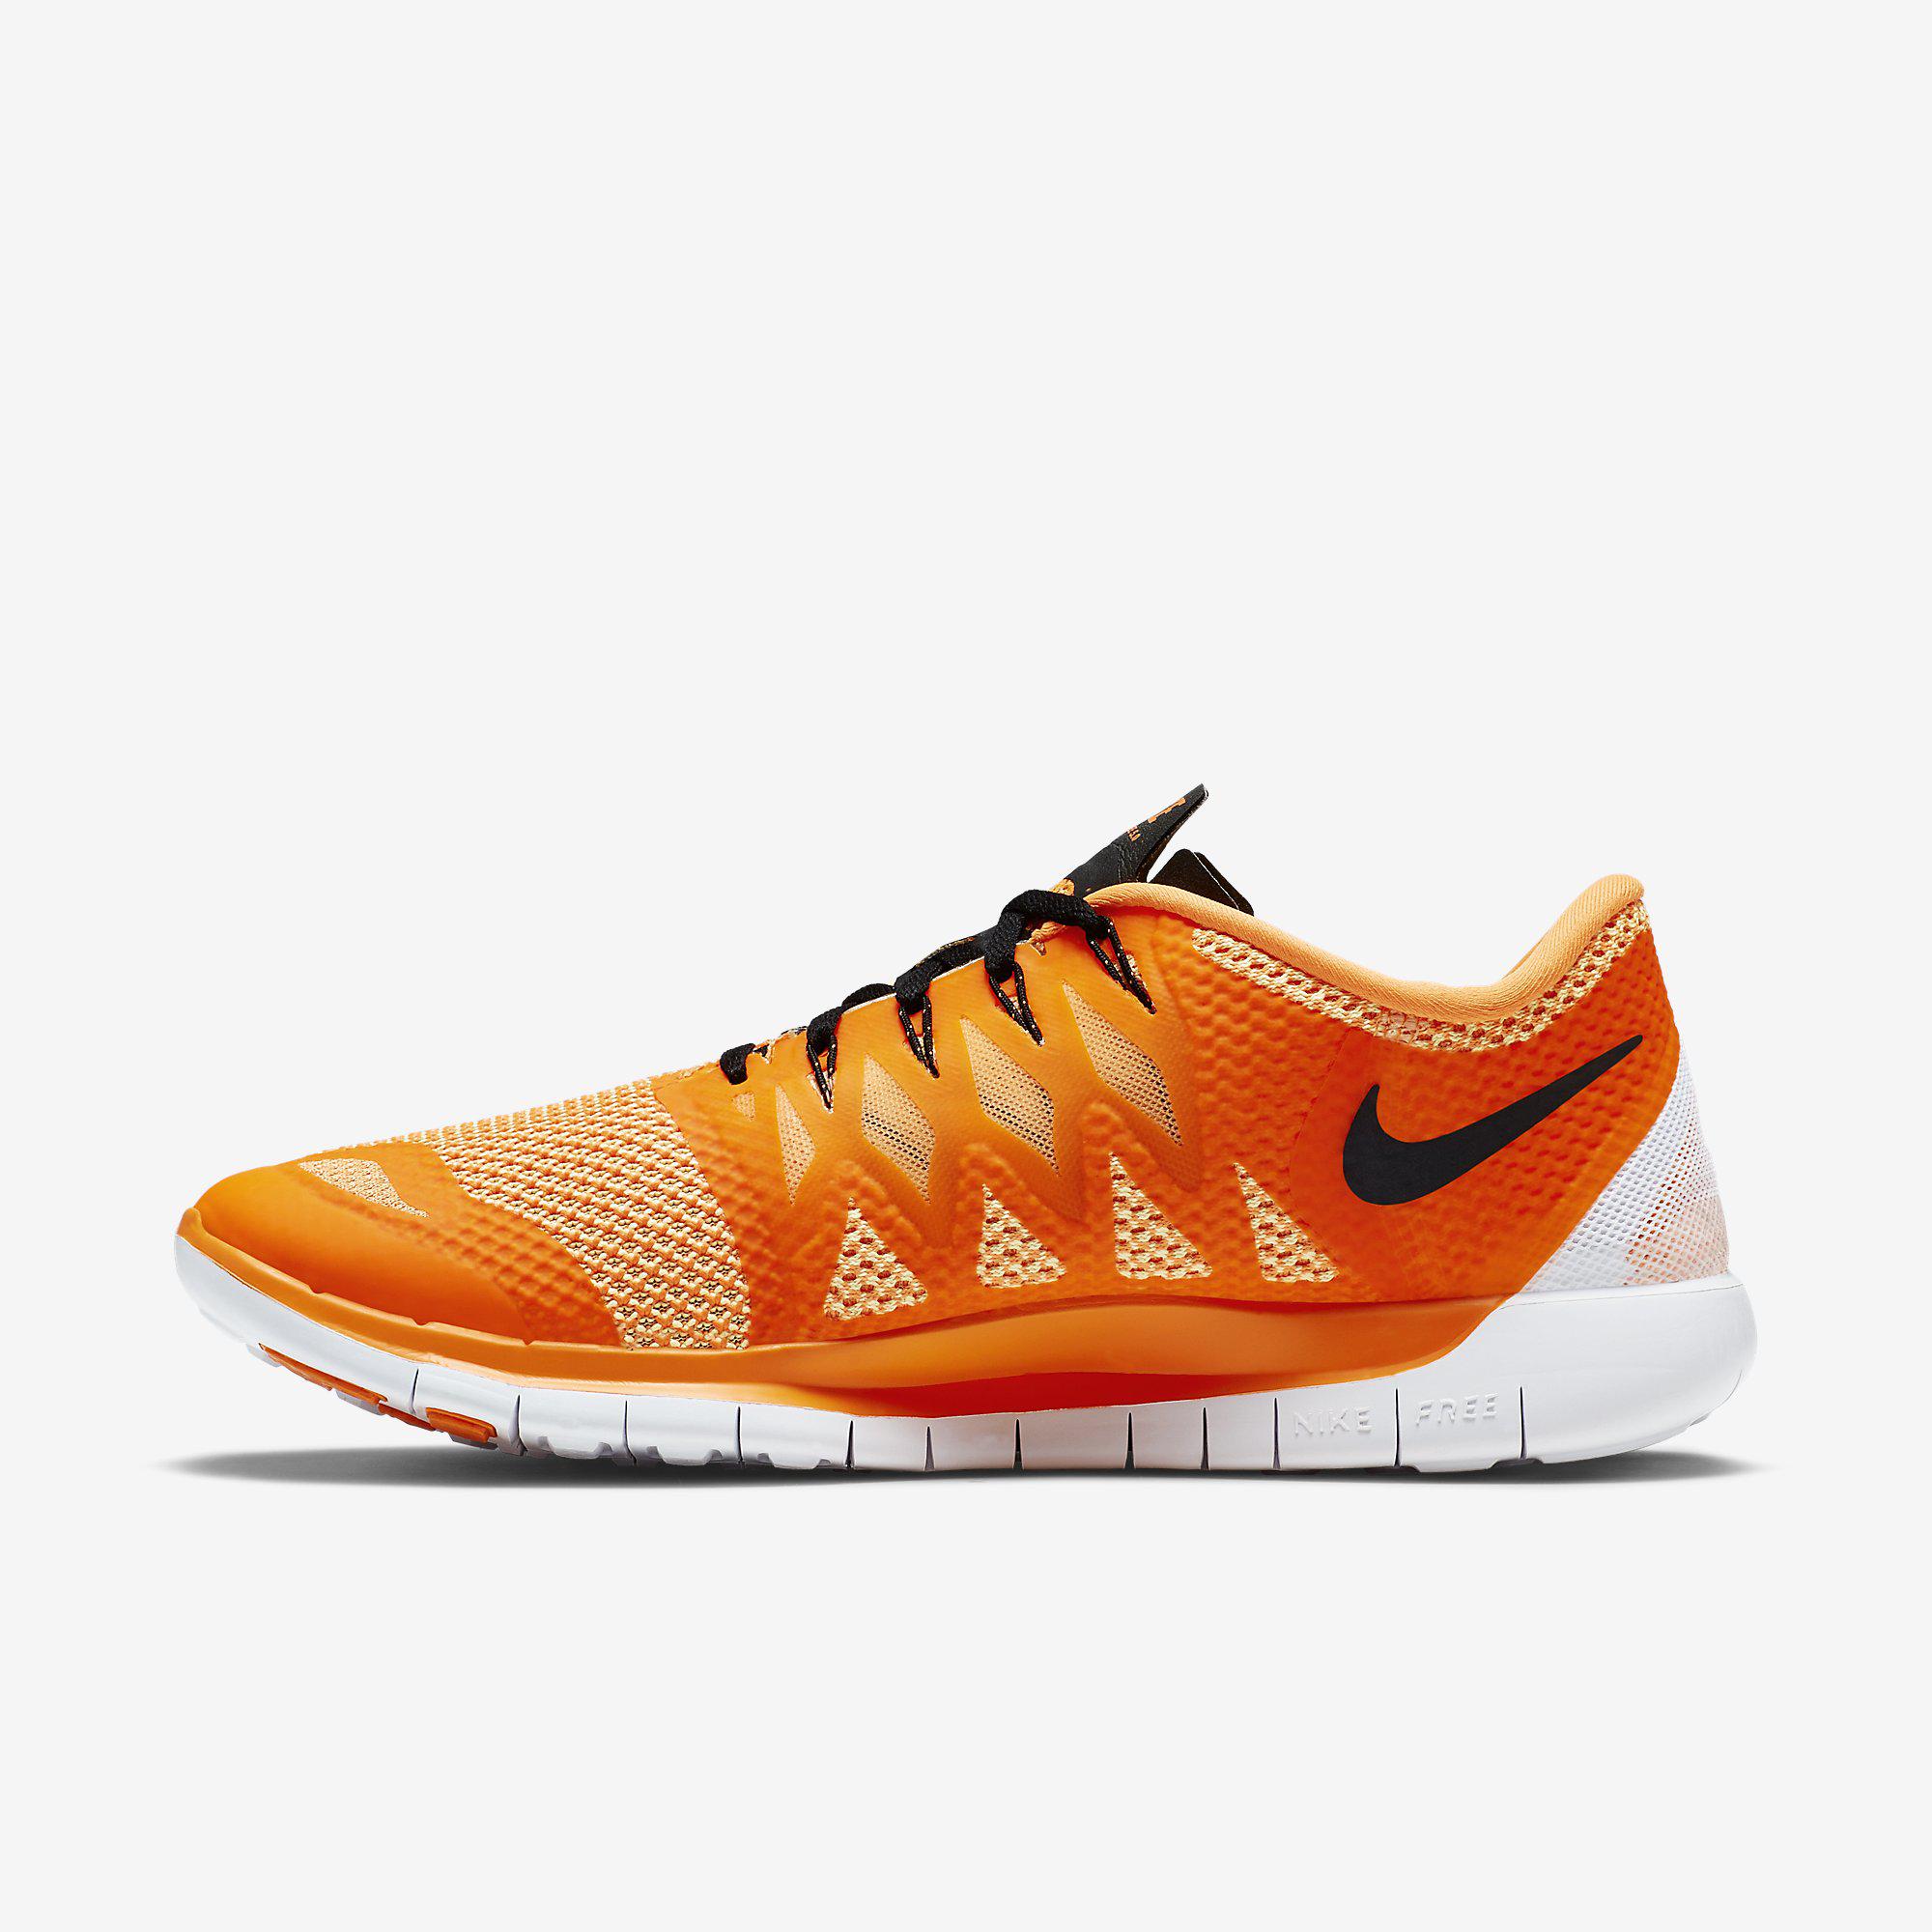 Nike Mens Free 5.0+ Running Shoes - Orange/Black - nrd.kbic-nsn.gov